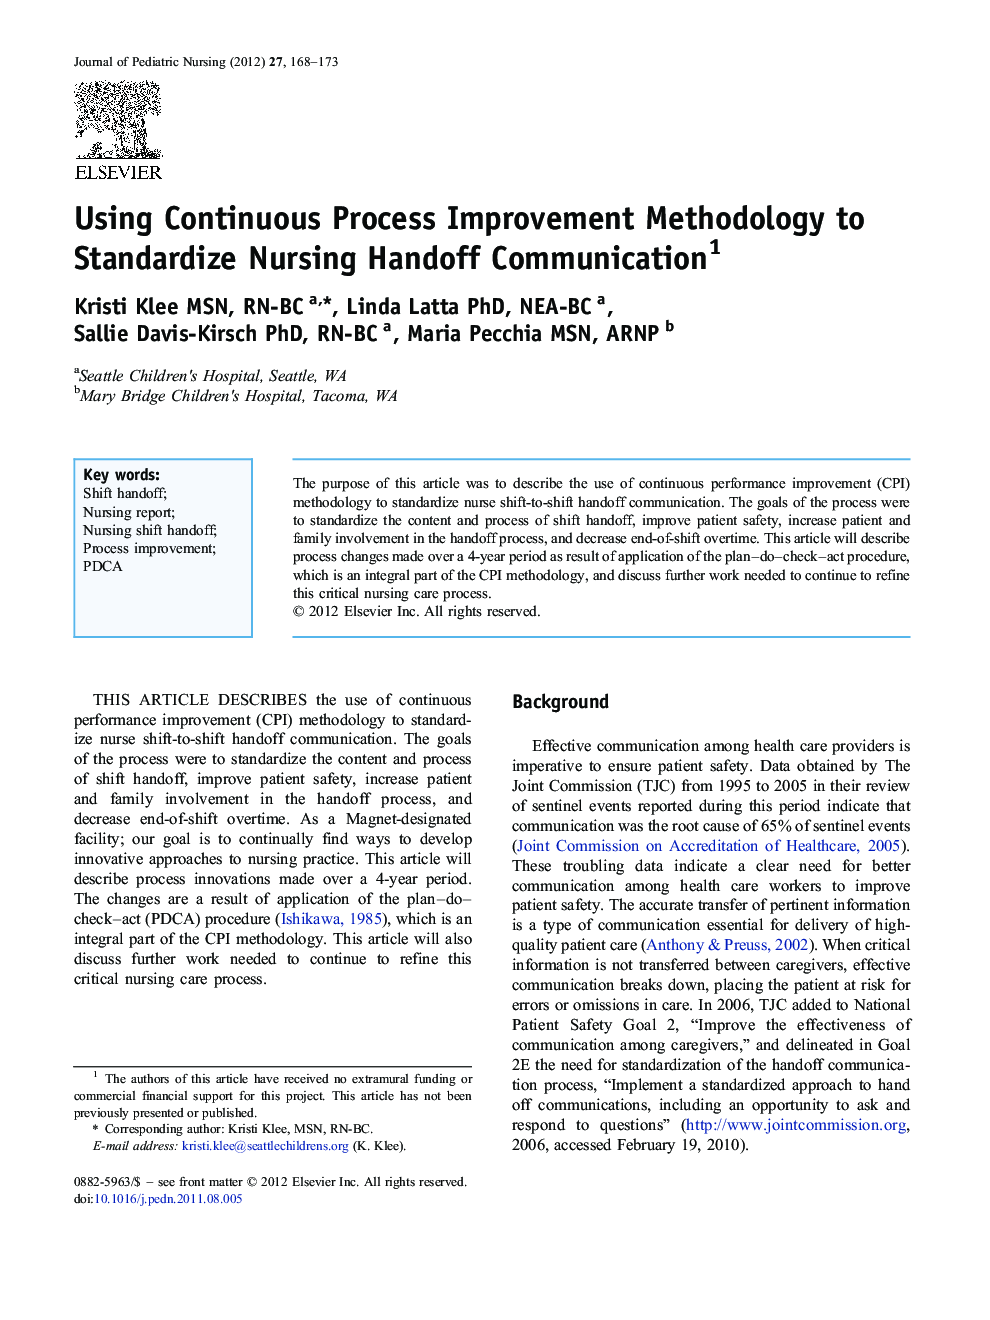 Using Continuous Process Improvement Methodology to Standardize Nursing Handoff Communication 1